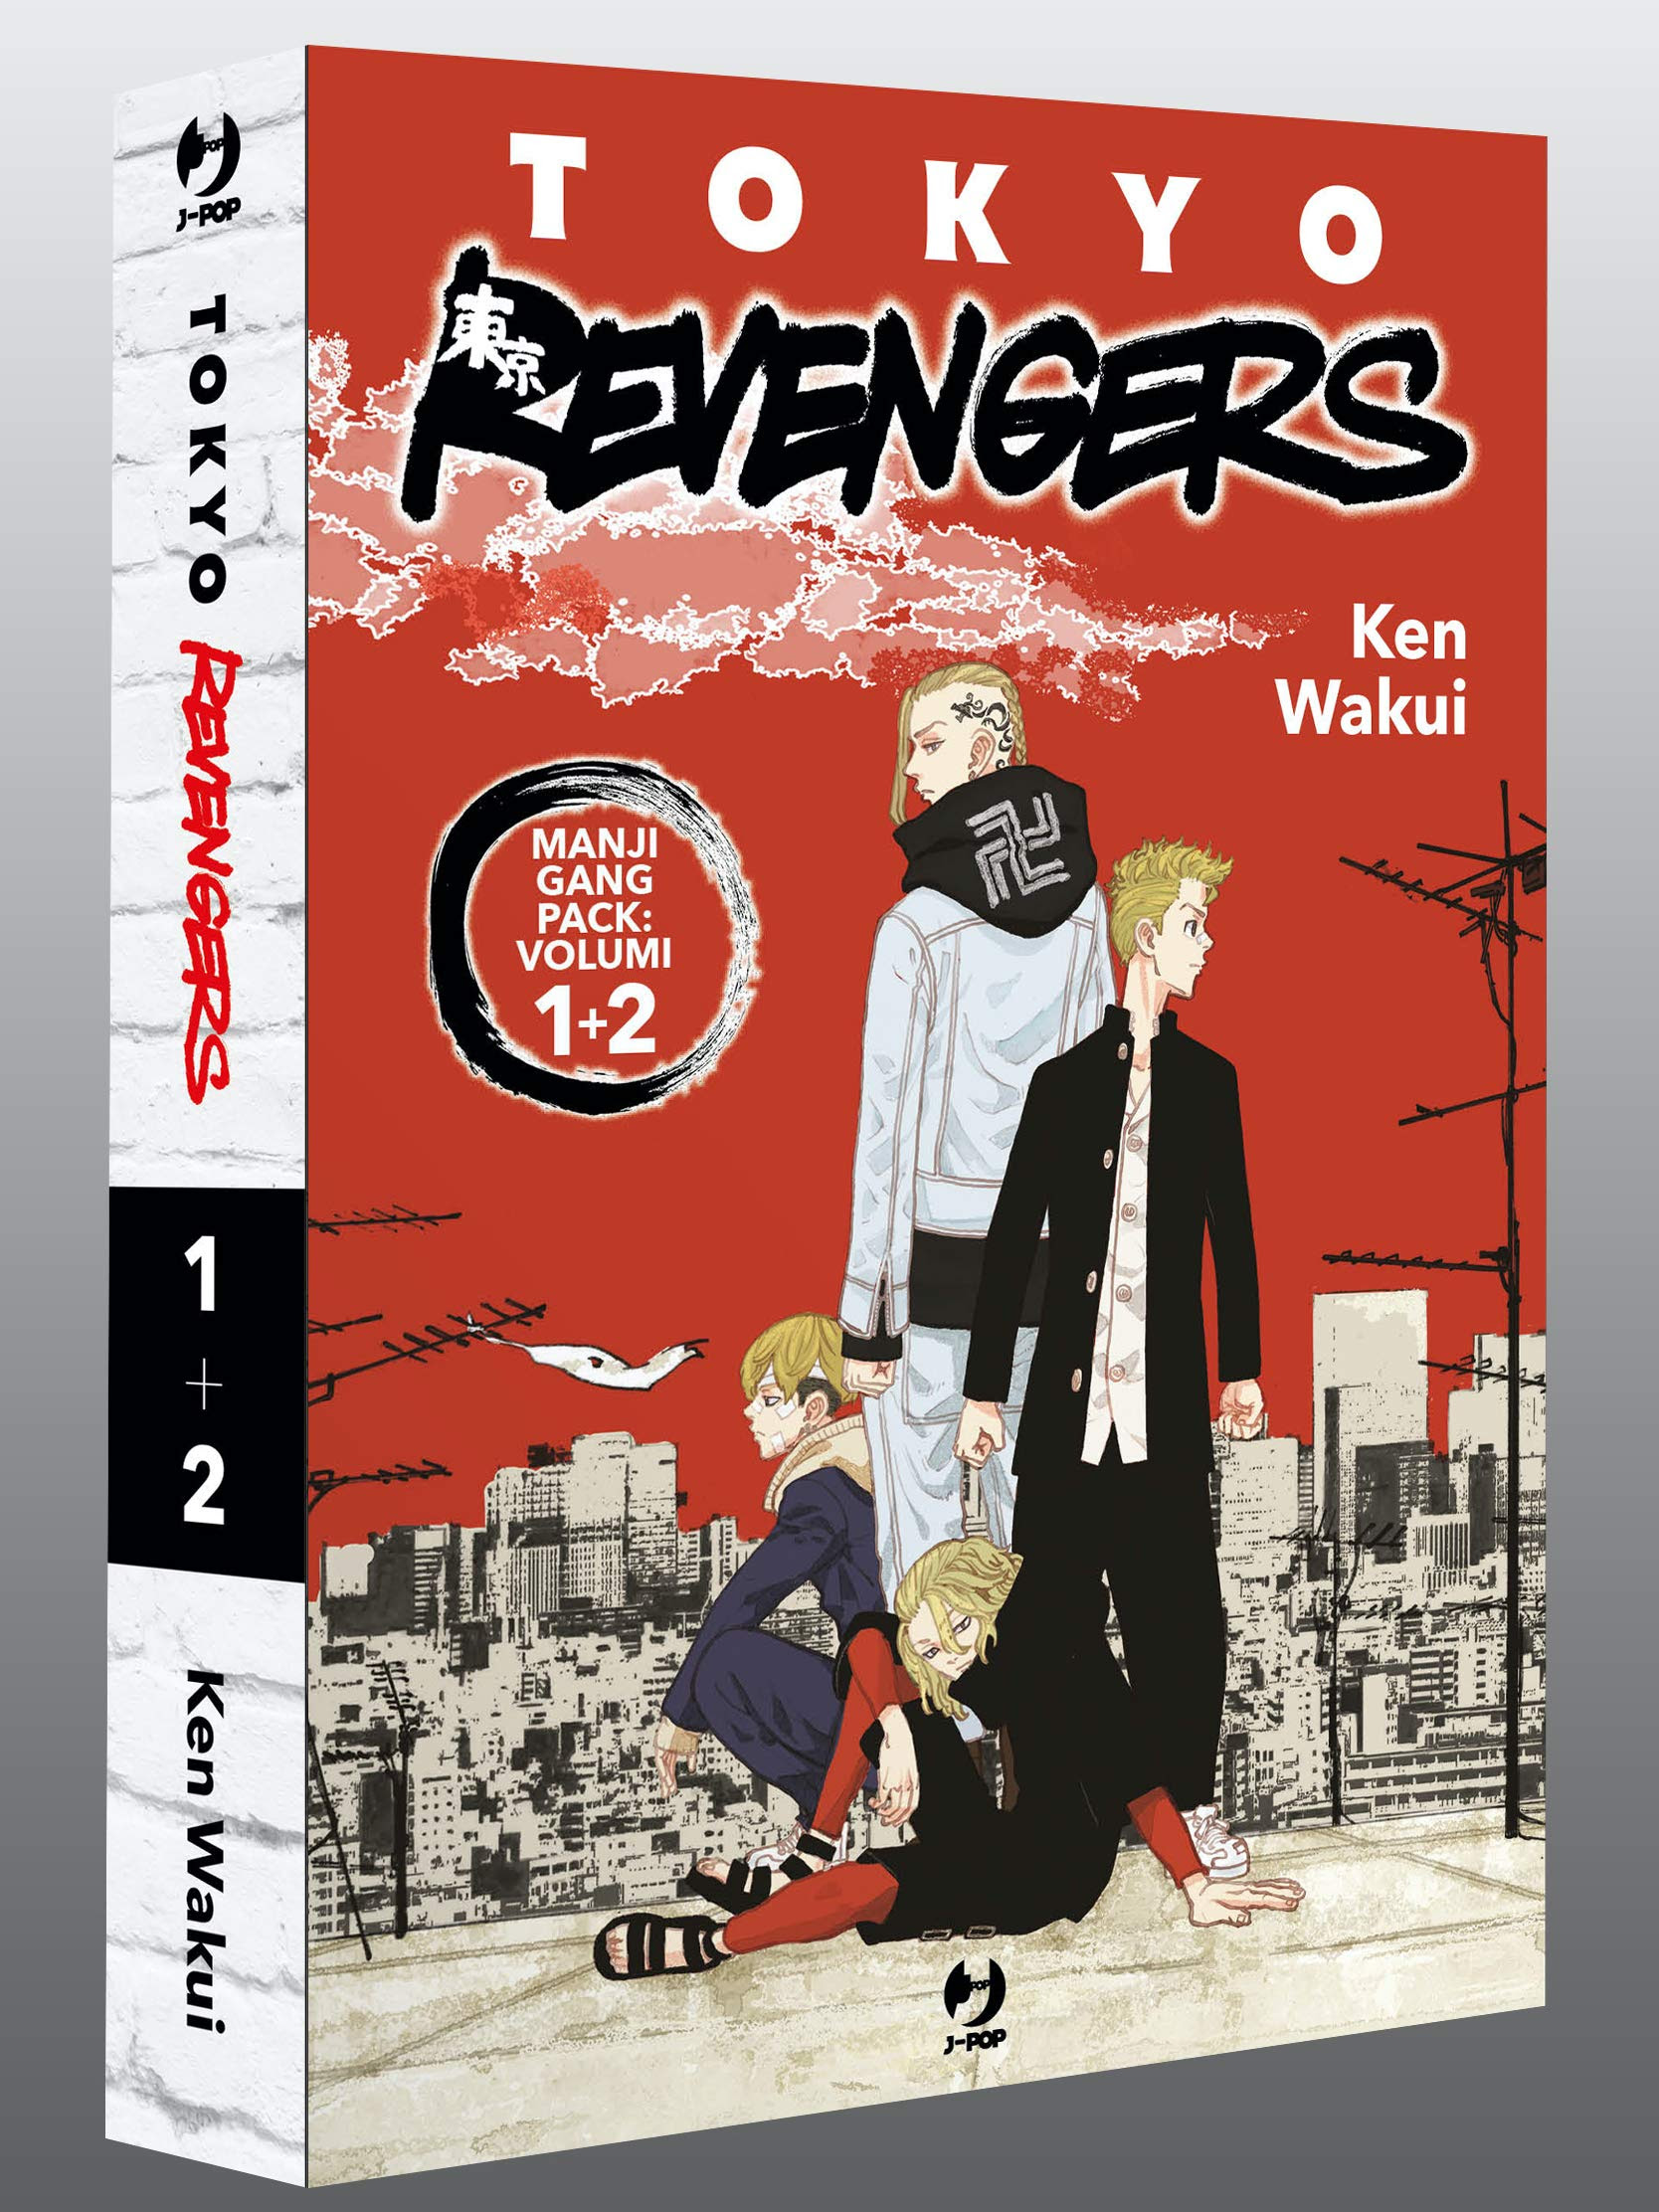 Tokyo Revengers - Manji Gang Pack: Vol. 1+2 in Kindle/PDF/EPUB